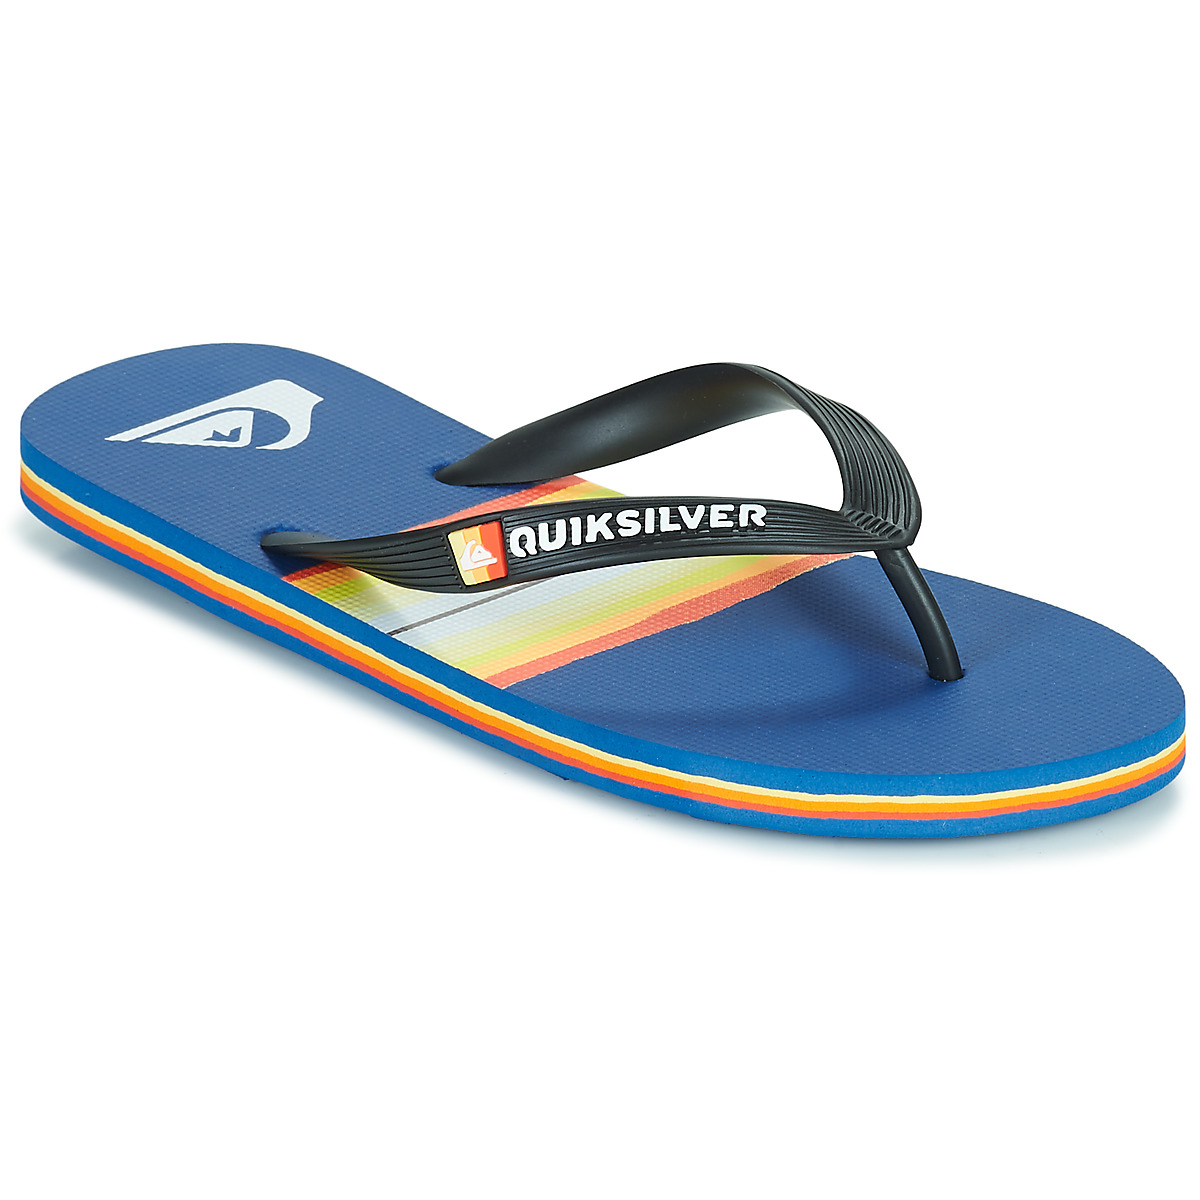 quiksilver  molokai resin tint  men's flip flops / sandals (shoes) in blue